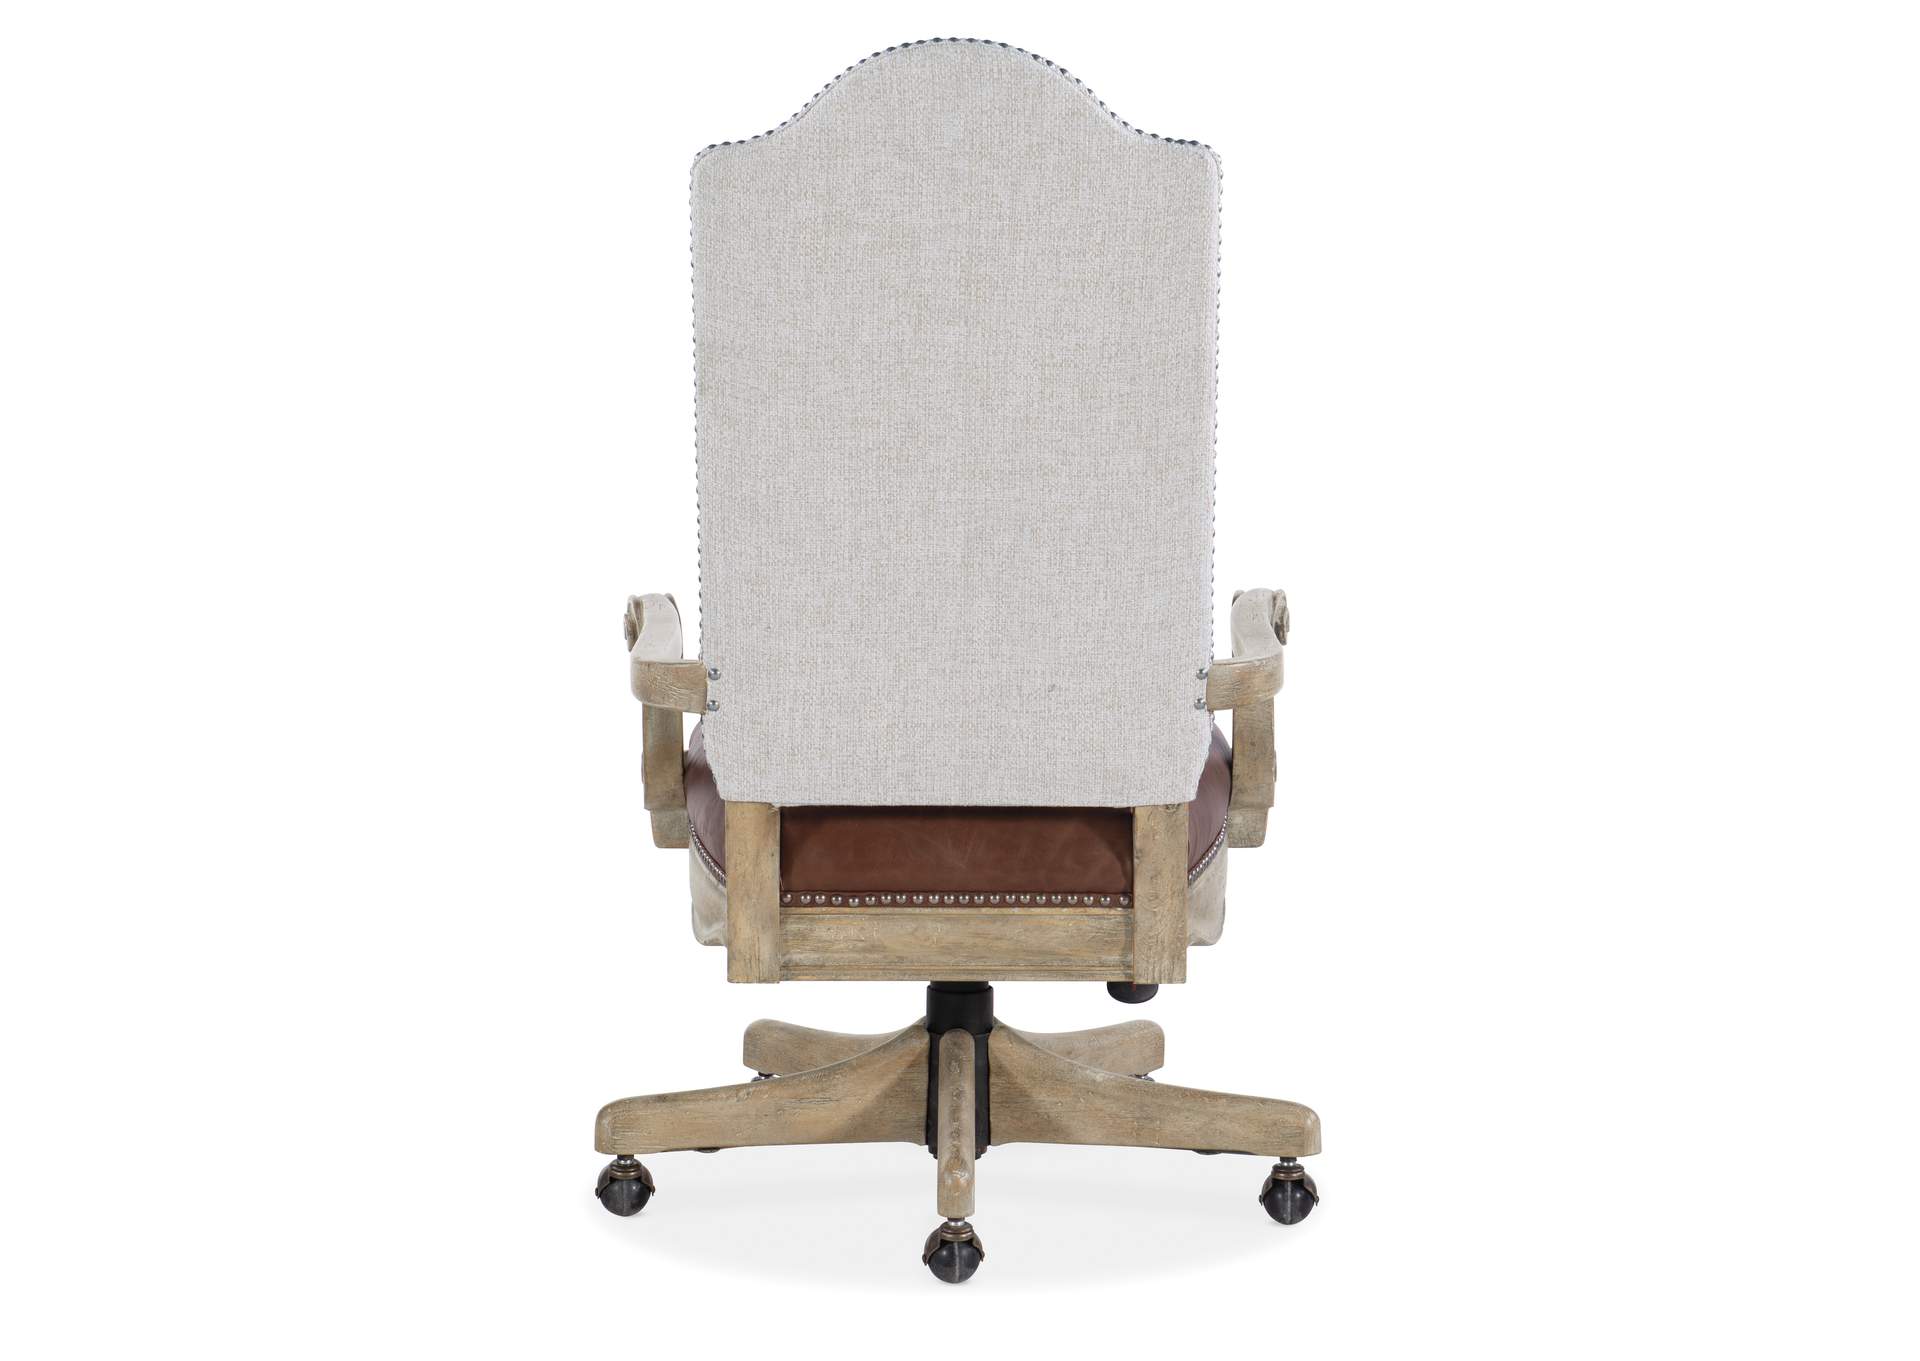 Castella Tilt Swivel Chair,Hooker Furniture